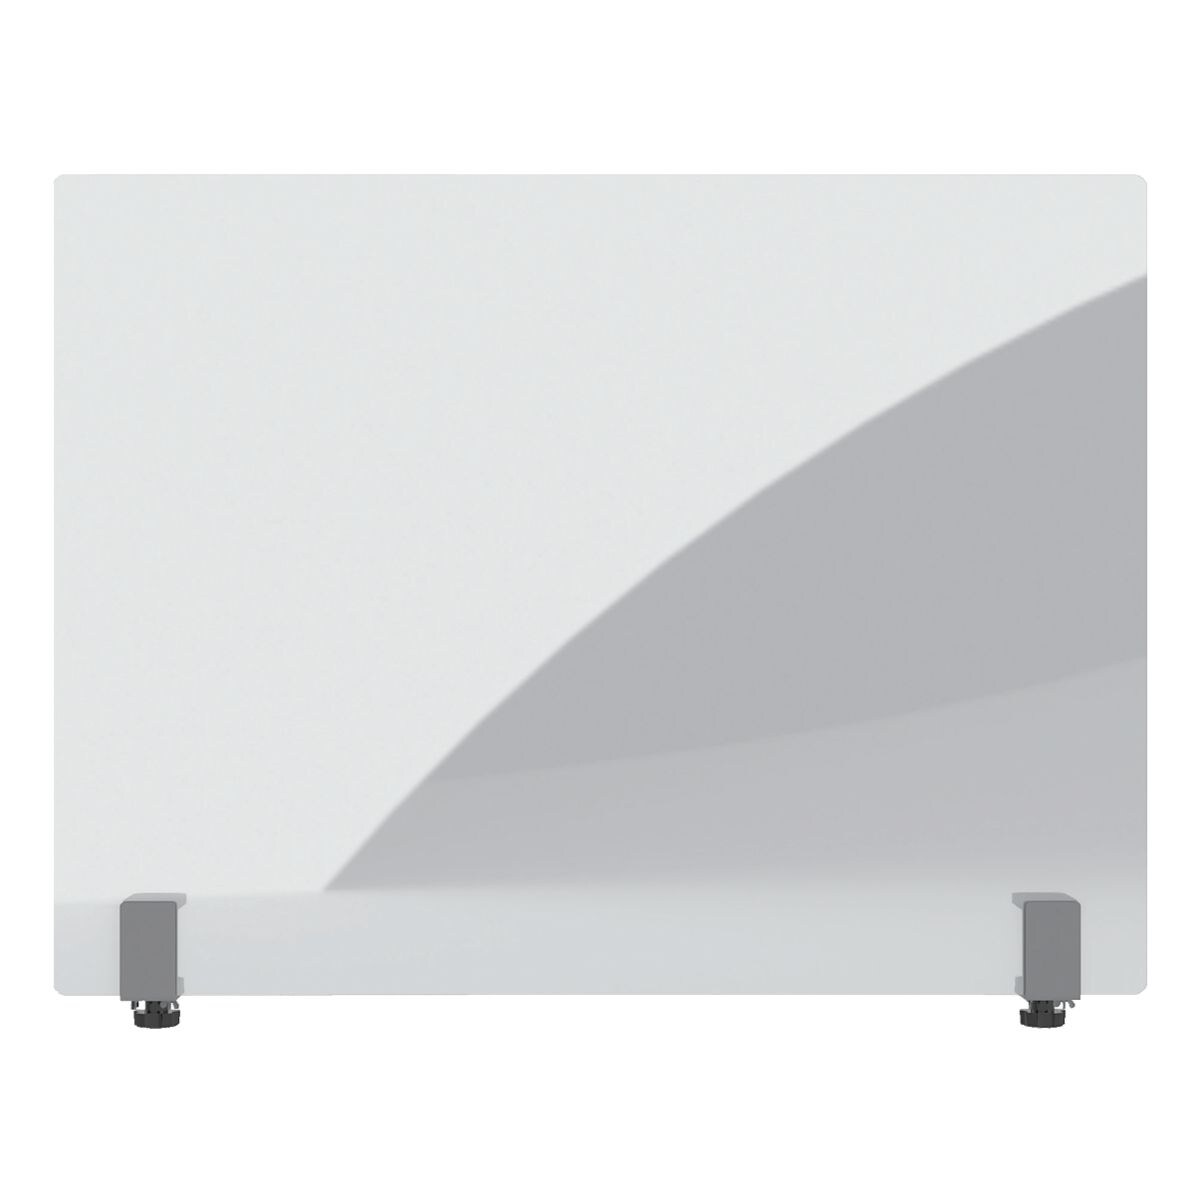 Magnetoplan Nies- en spuugbescherming frameloos hyginewand acrylglas met klemhouders 102 x 7 x 62 cm